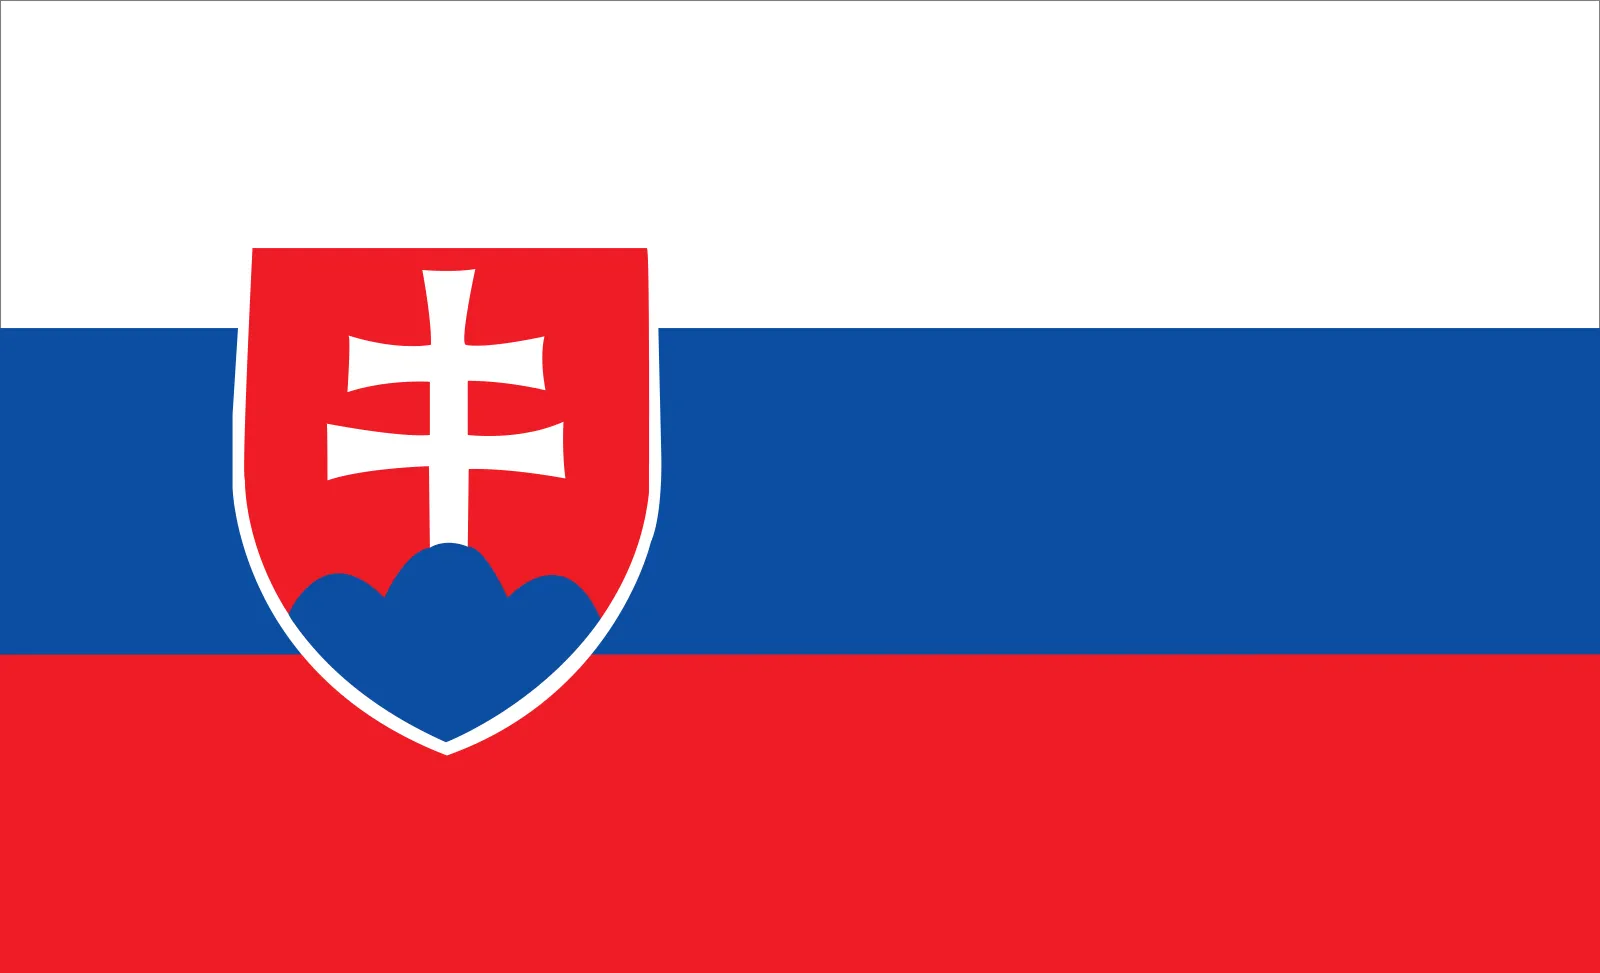 Celebrating Slovakia Day of Freedom and Democracy